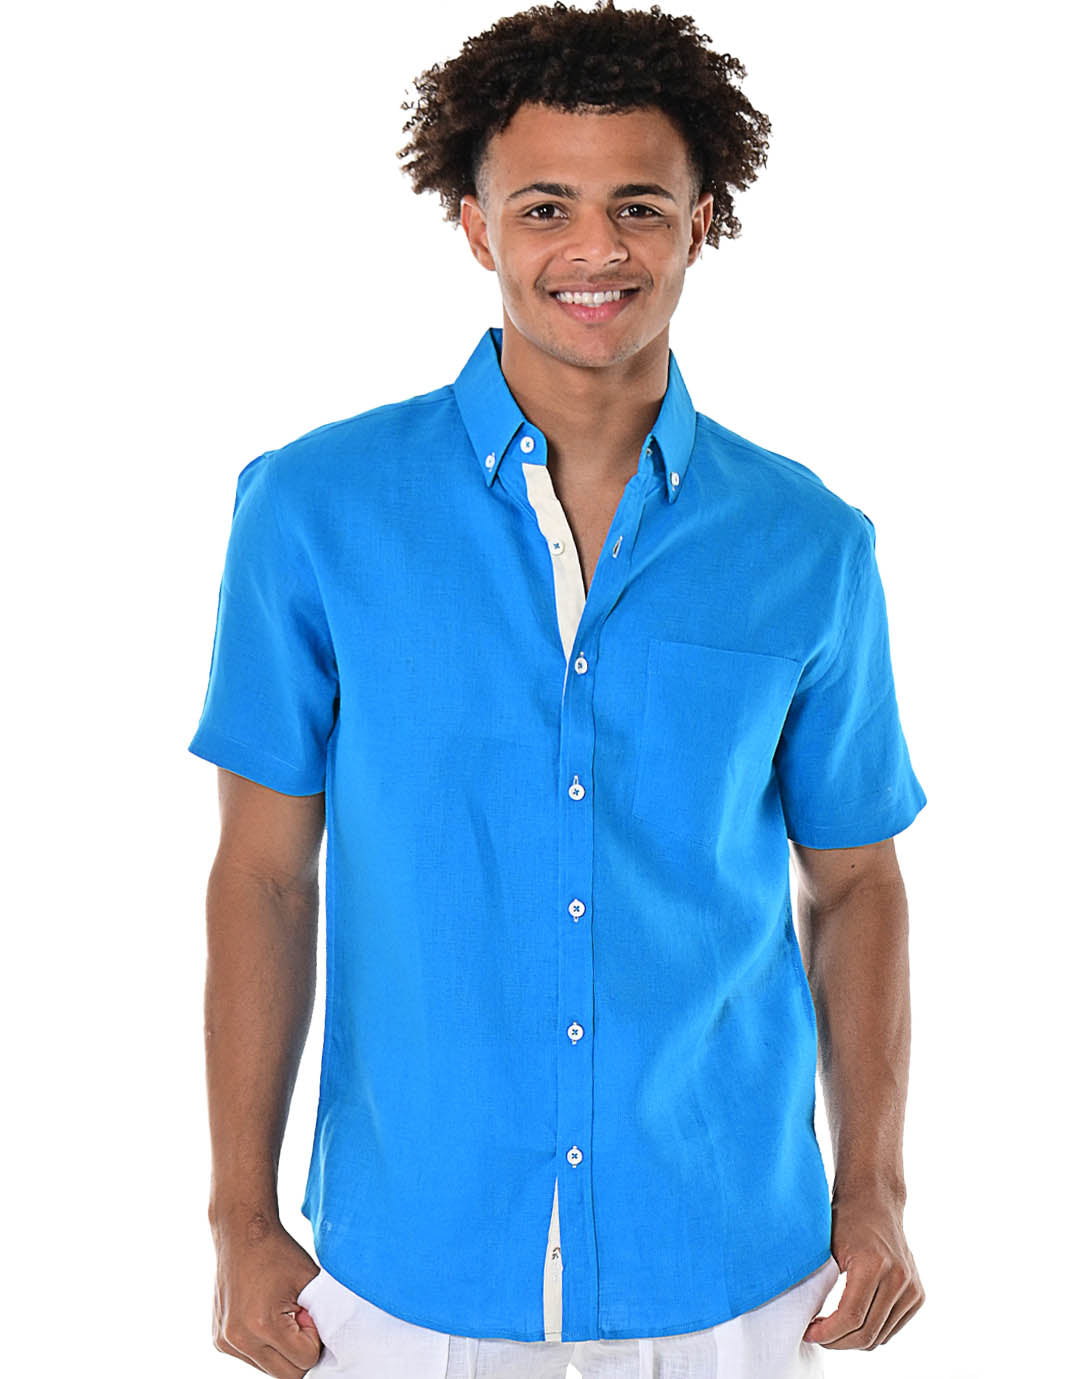 Bohio Men's 100% Linen Short Sleeve Shirt w/Pocket & Contrast